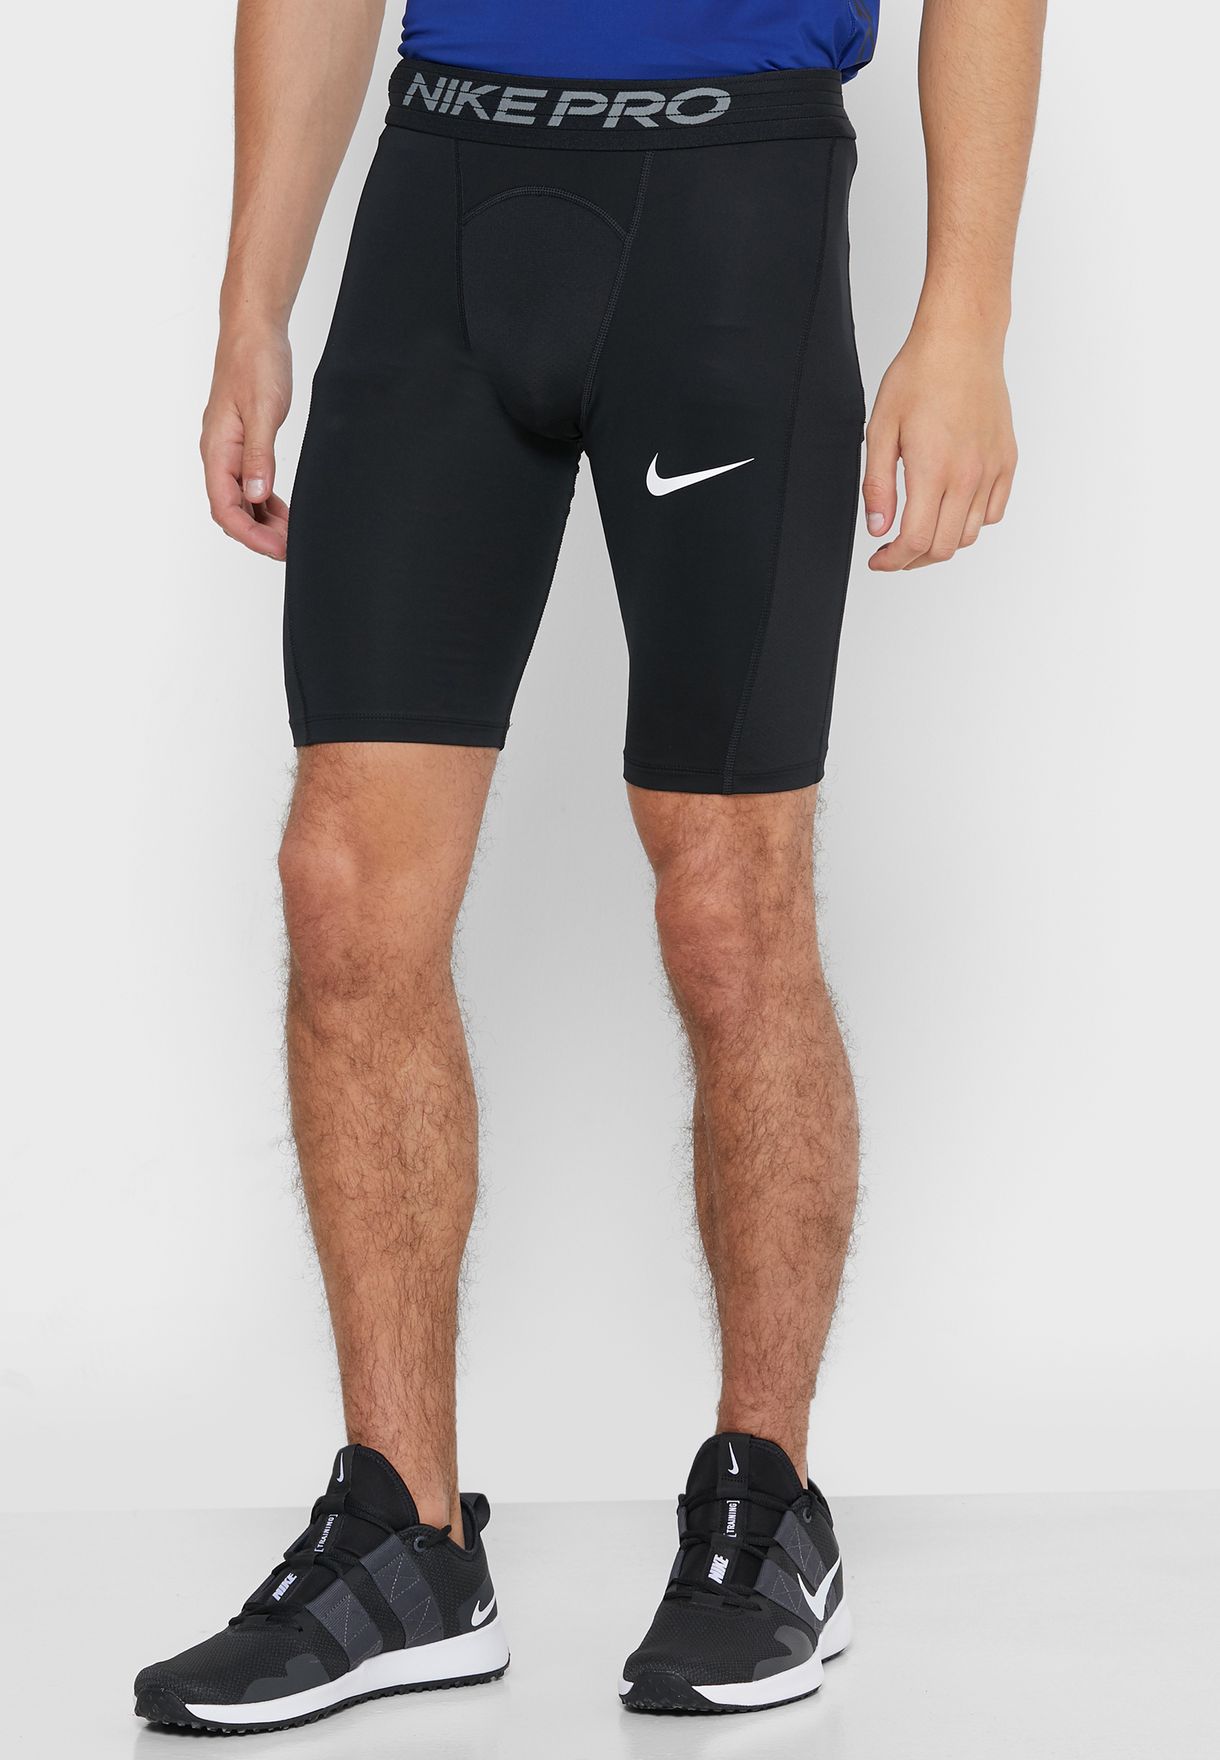 where to buy nike pro shorts